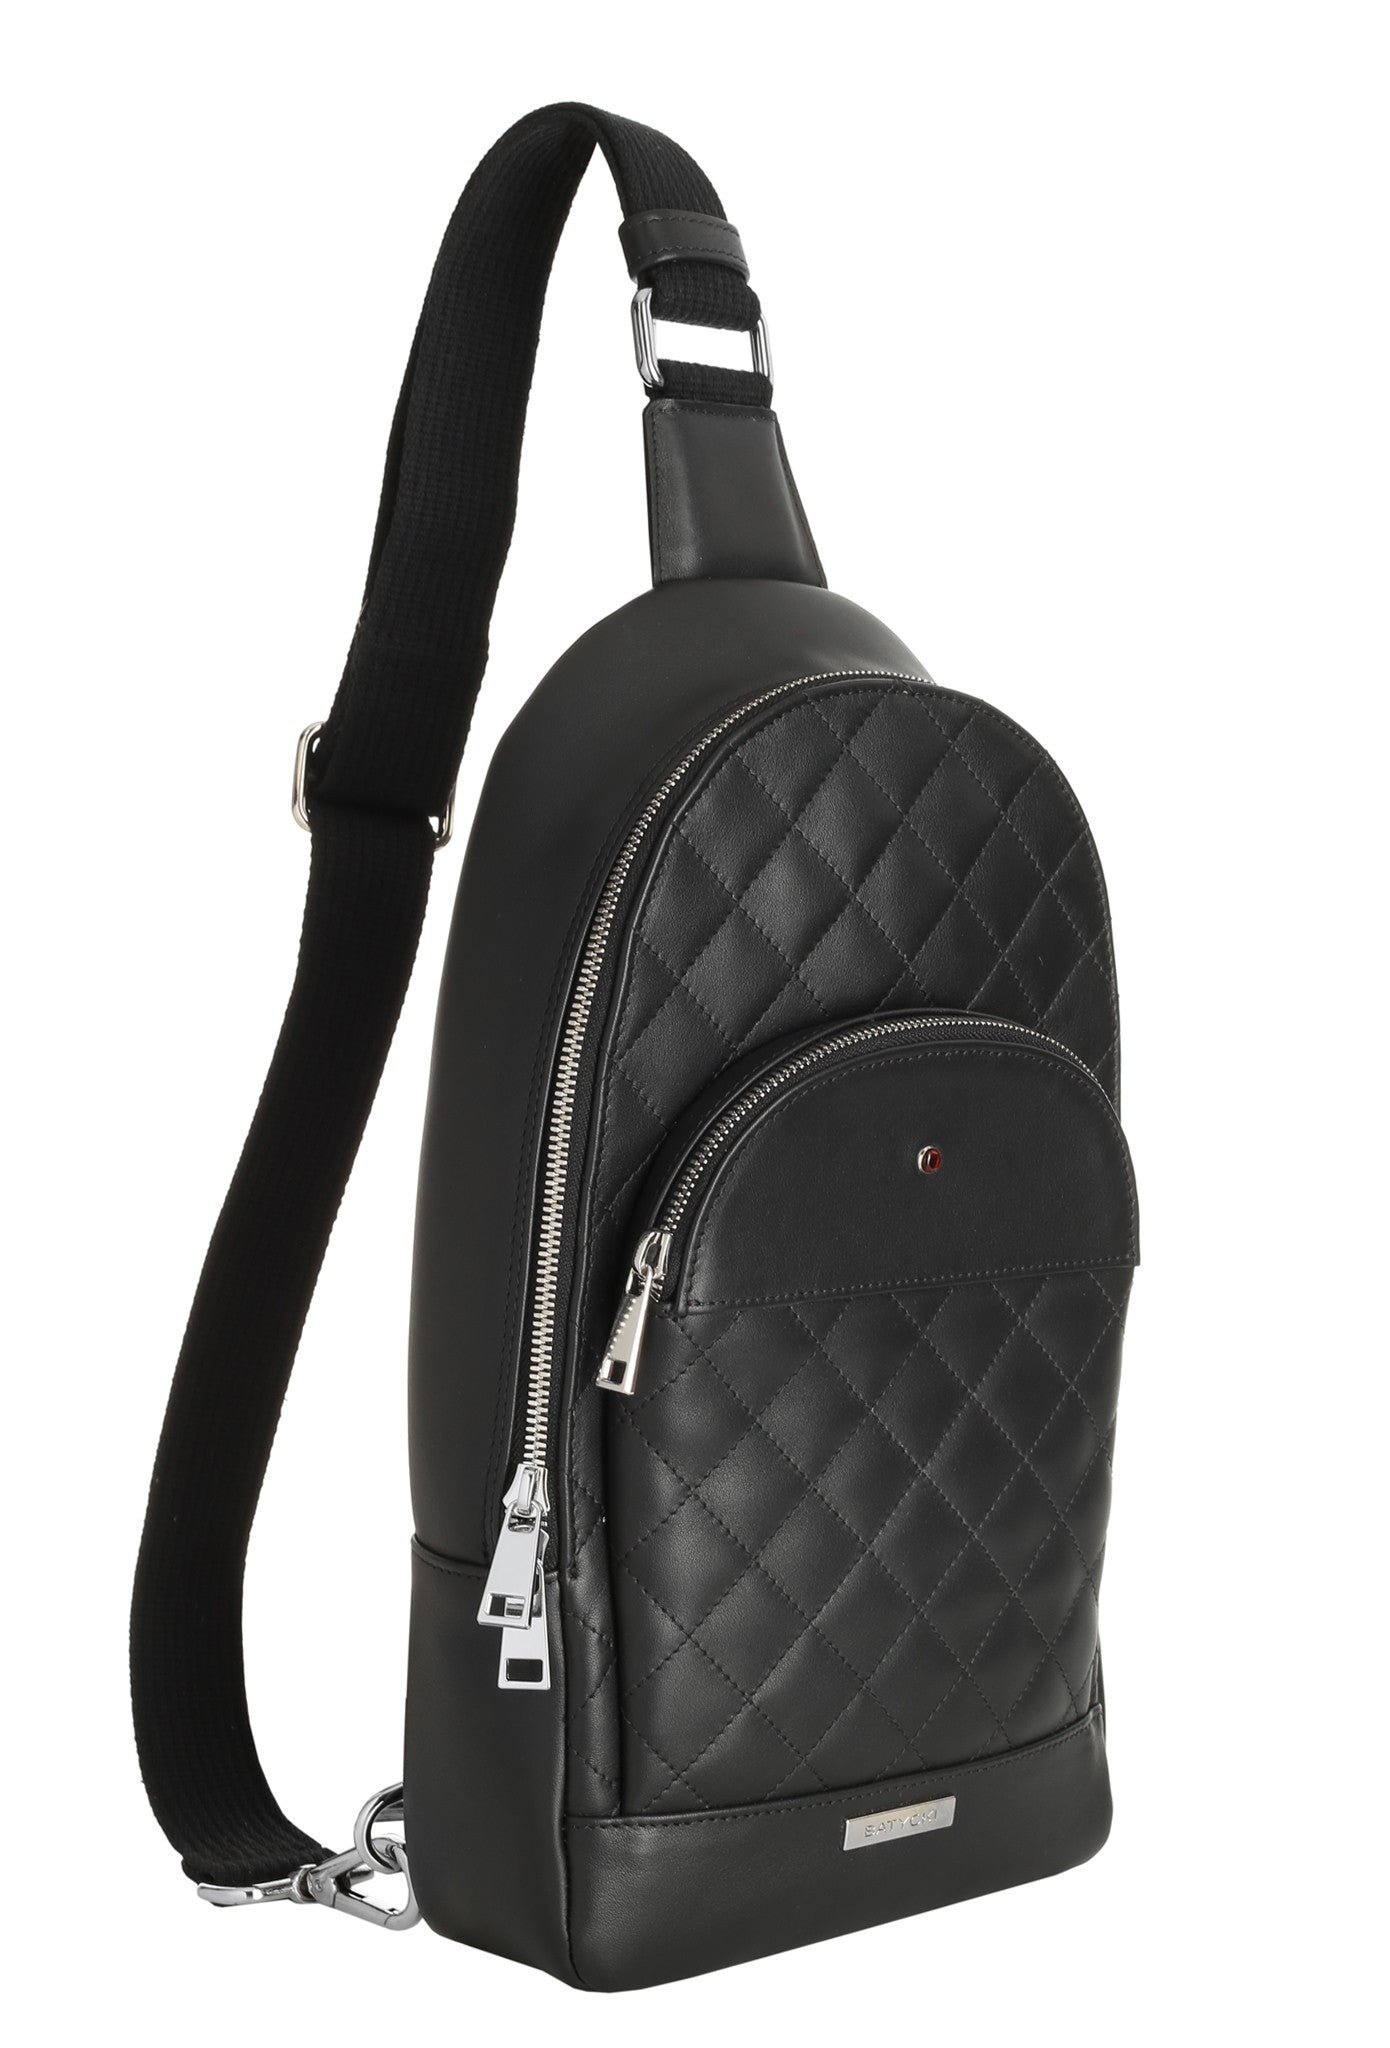 BE TRAVELING NAPA BLACK leather backpack